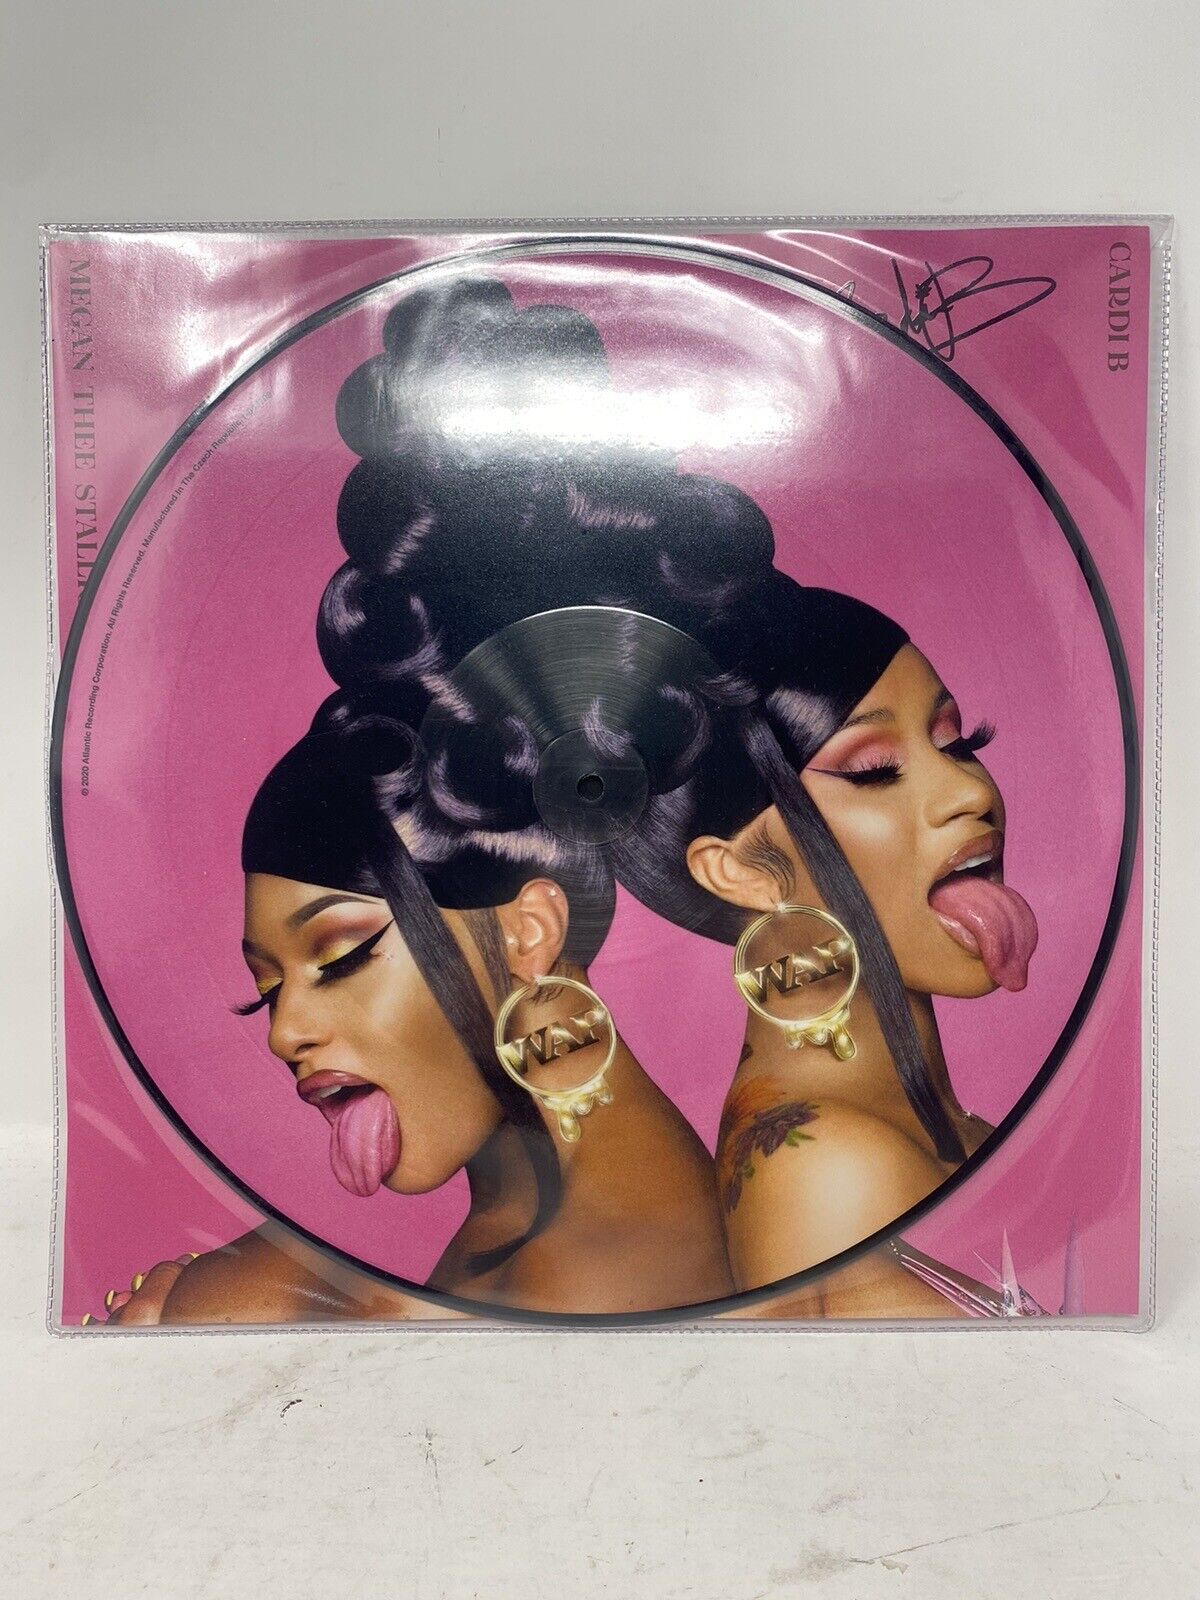 Cardi B SIGNED Limited Edition Pink WAP Vinyl Megan Thee Stallion